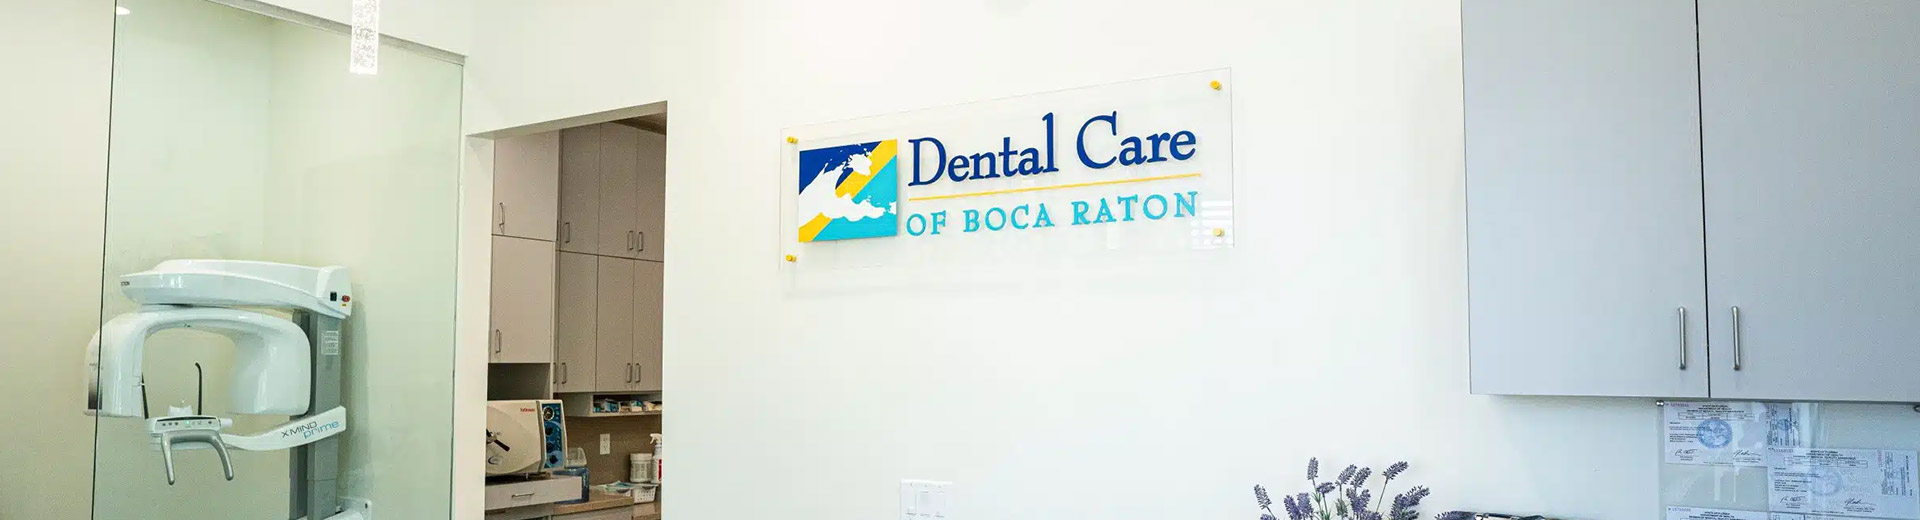 Dental Care of Boca Raton - Office